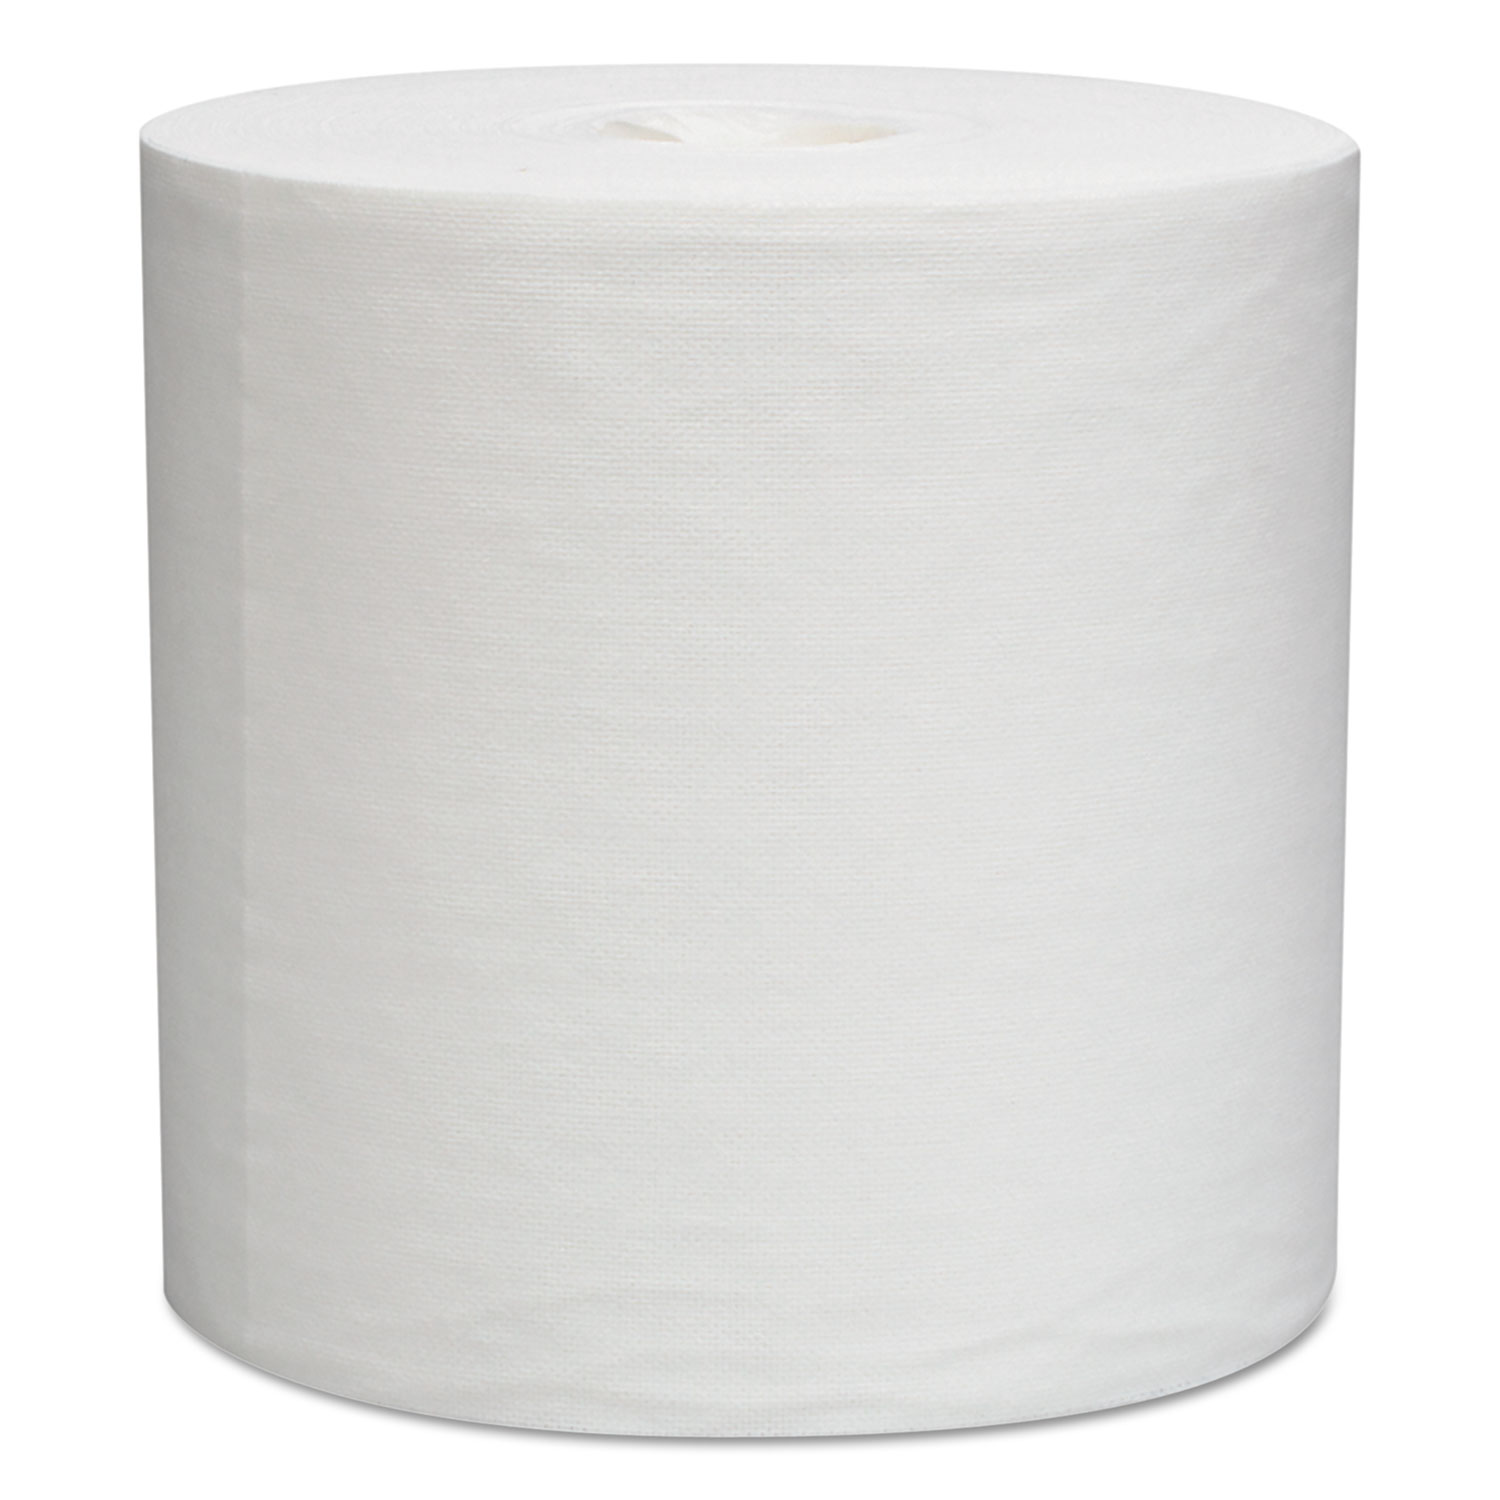  WypAll 5820 L30 Towels, Center-Pull Roll, 9 4/5 x 15 1/5, White, 300/Roll, 2 Rolls/Carton (KCC05820) 